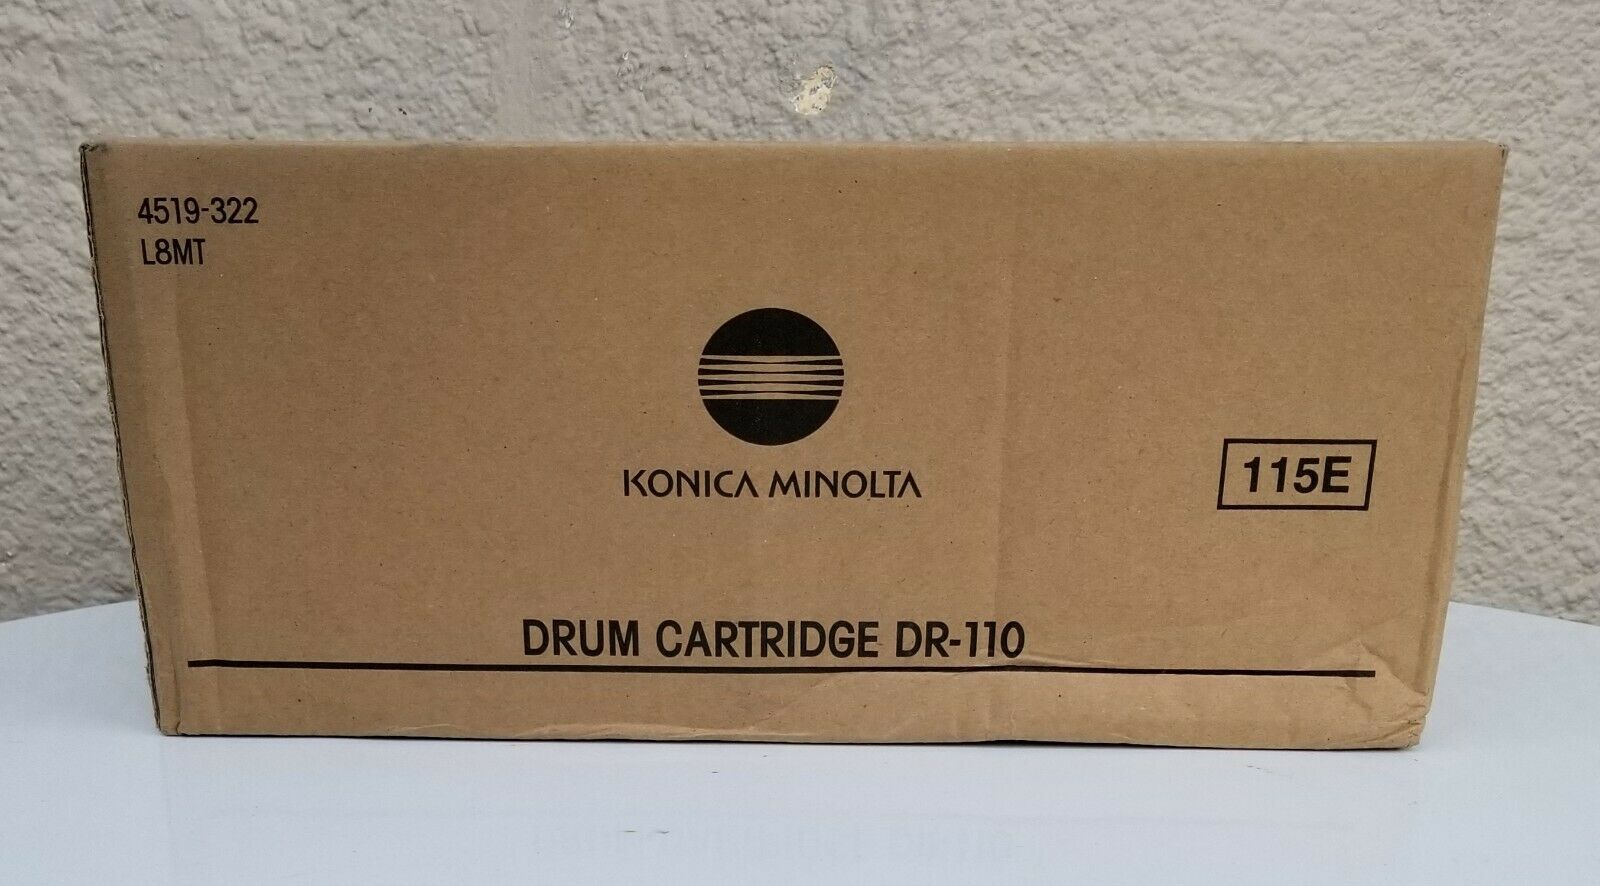 Konica Minolta DR-110 Drum Cartridge 4519-322. New, Genuine And Unopened. - $21.69